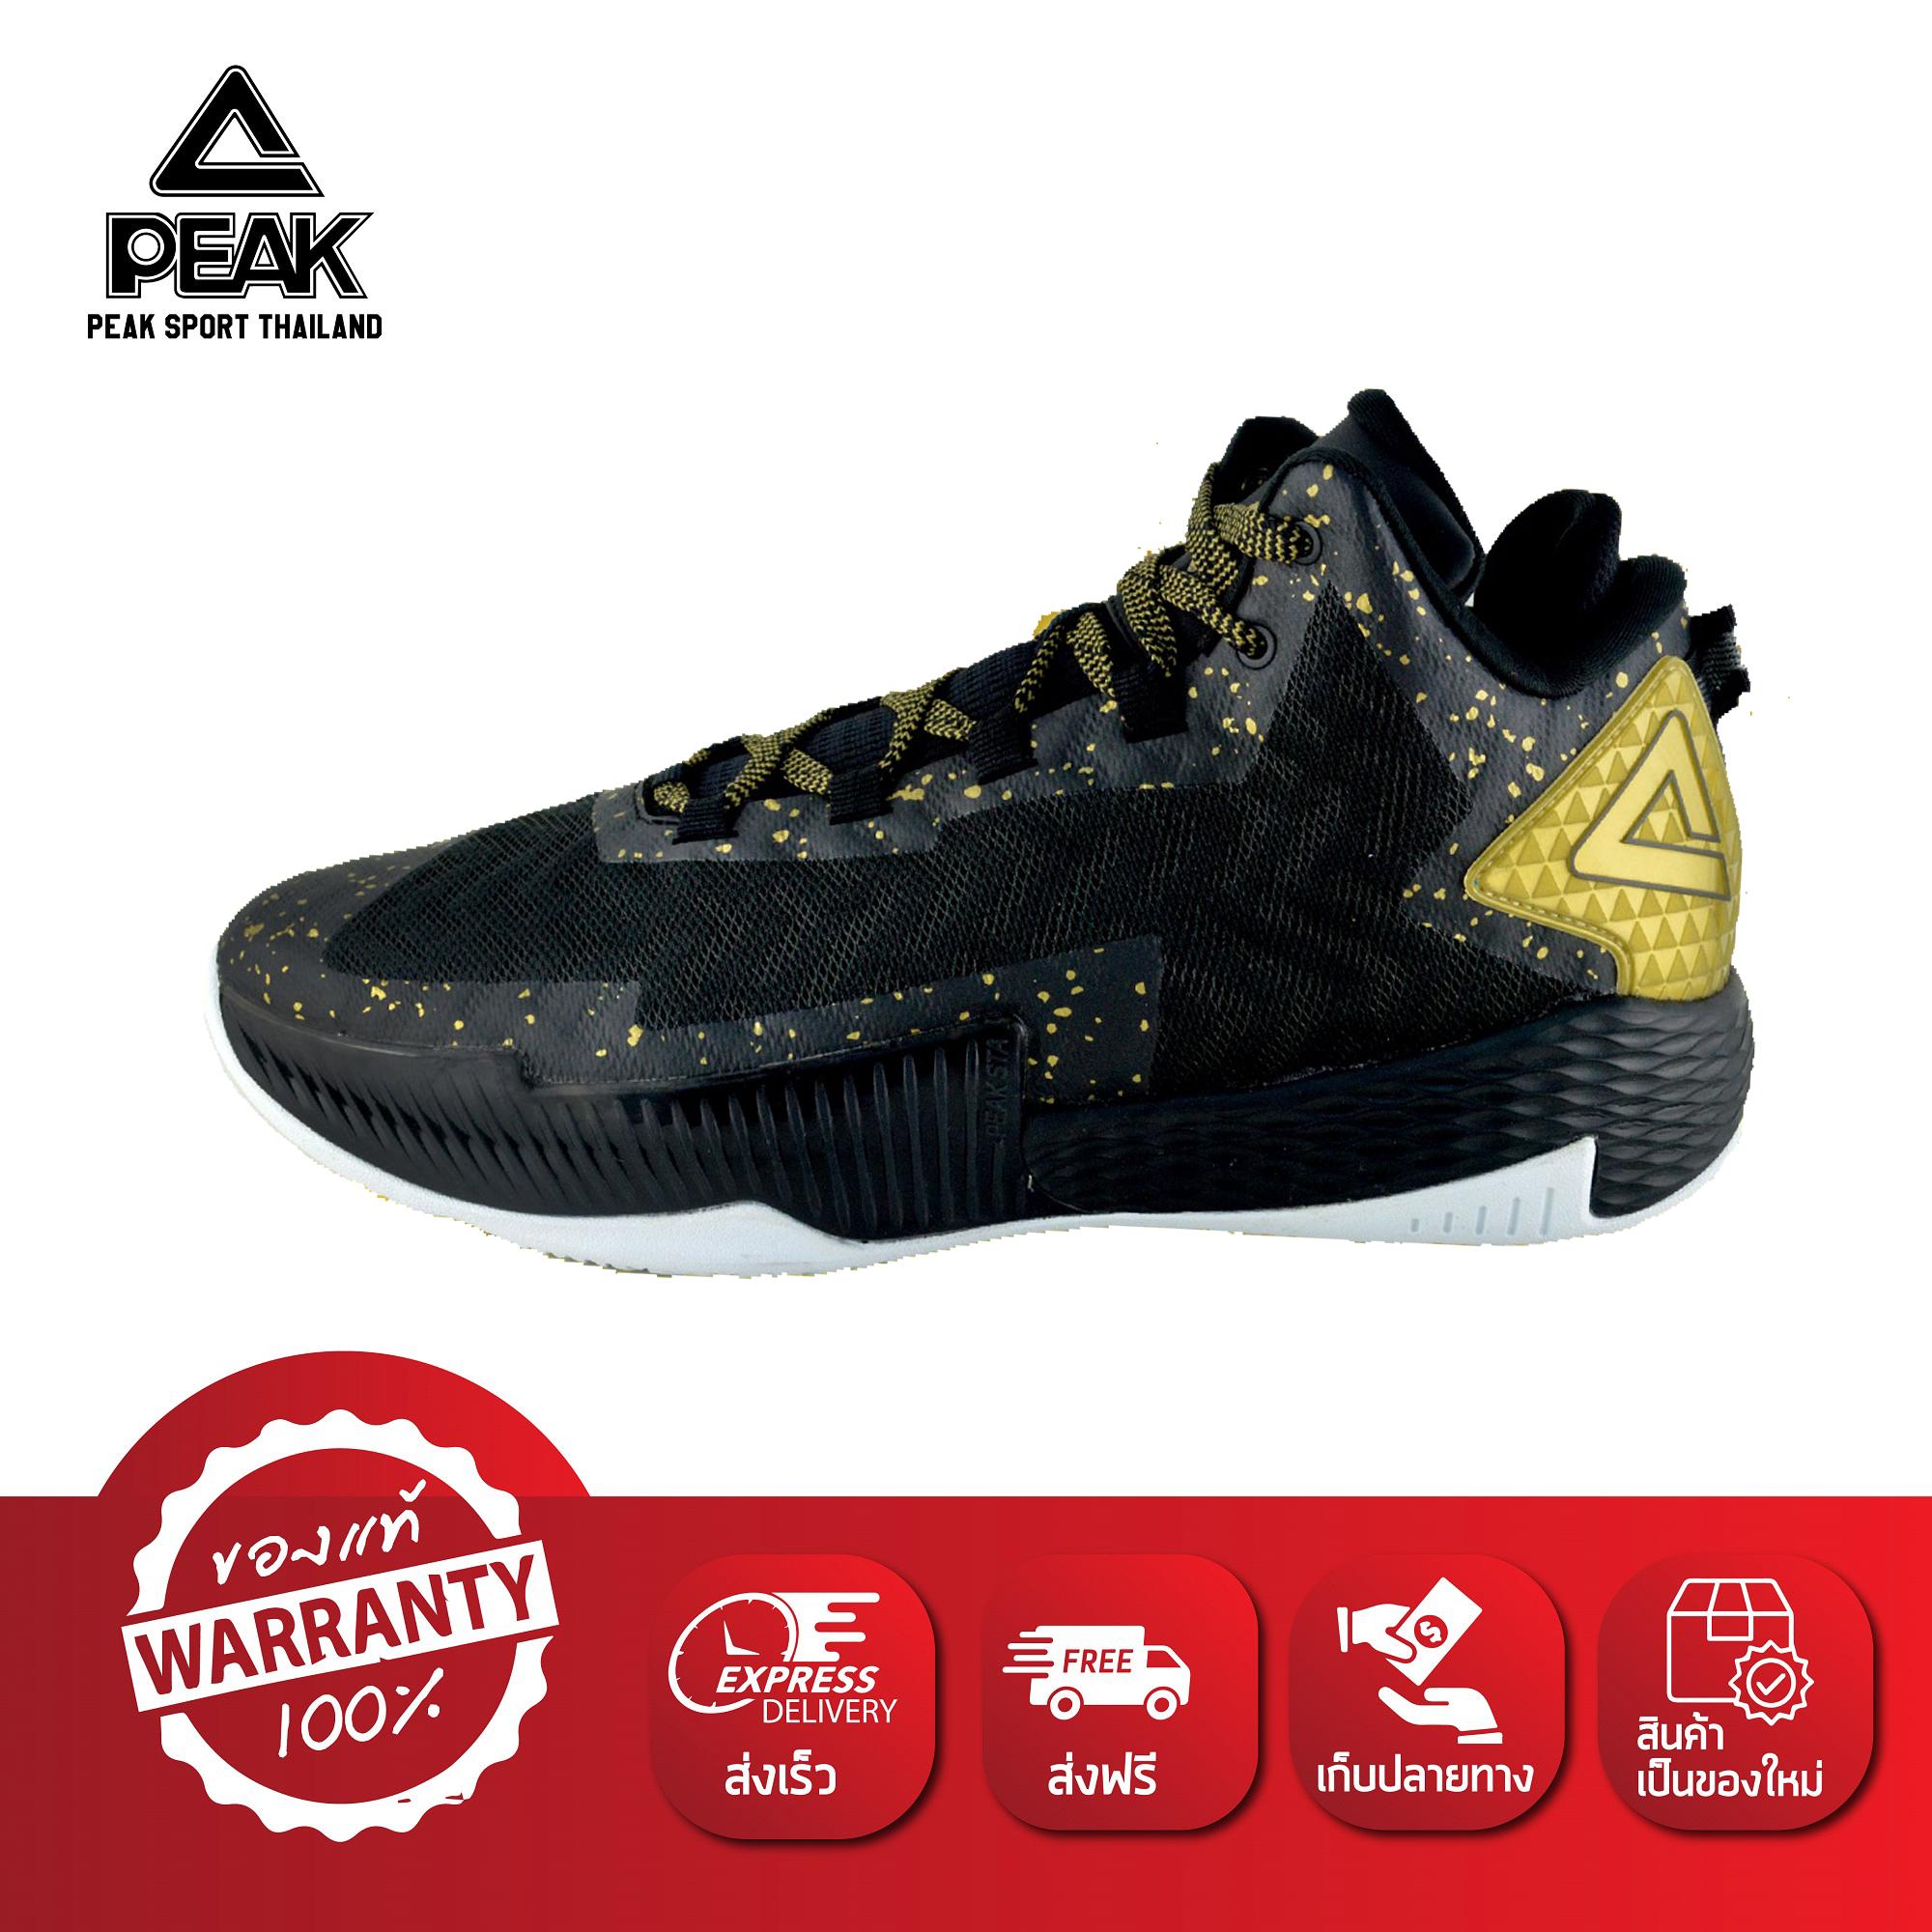 PEAK รองเท้า บาสเกตบอล ระดับ เอ็นบีเอ NBA Basketball shoes พีค รุ่น E81053A (มี 4สี ดำ,แดง,ชมพู,ม่วง)